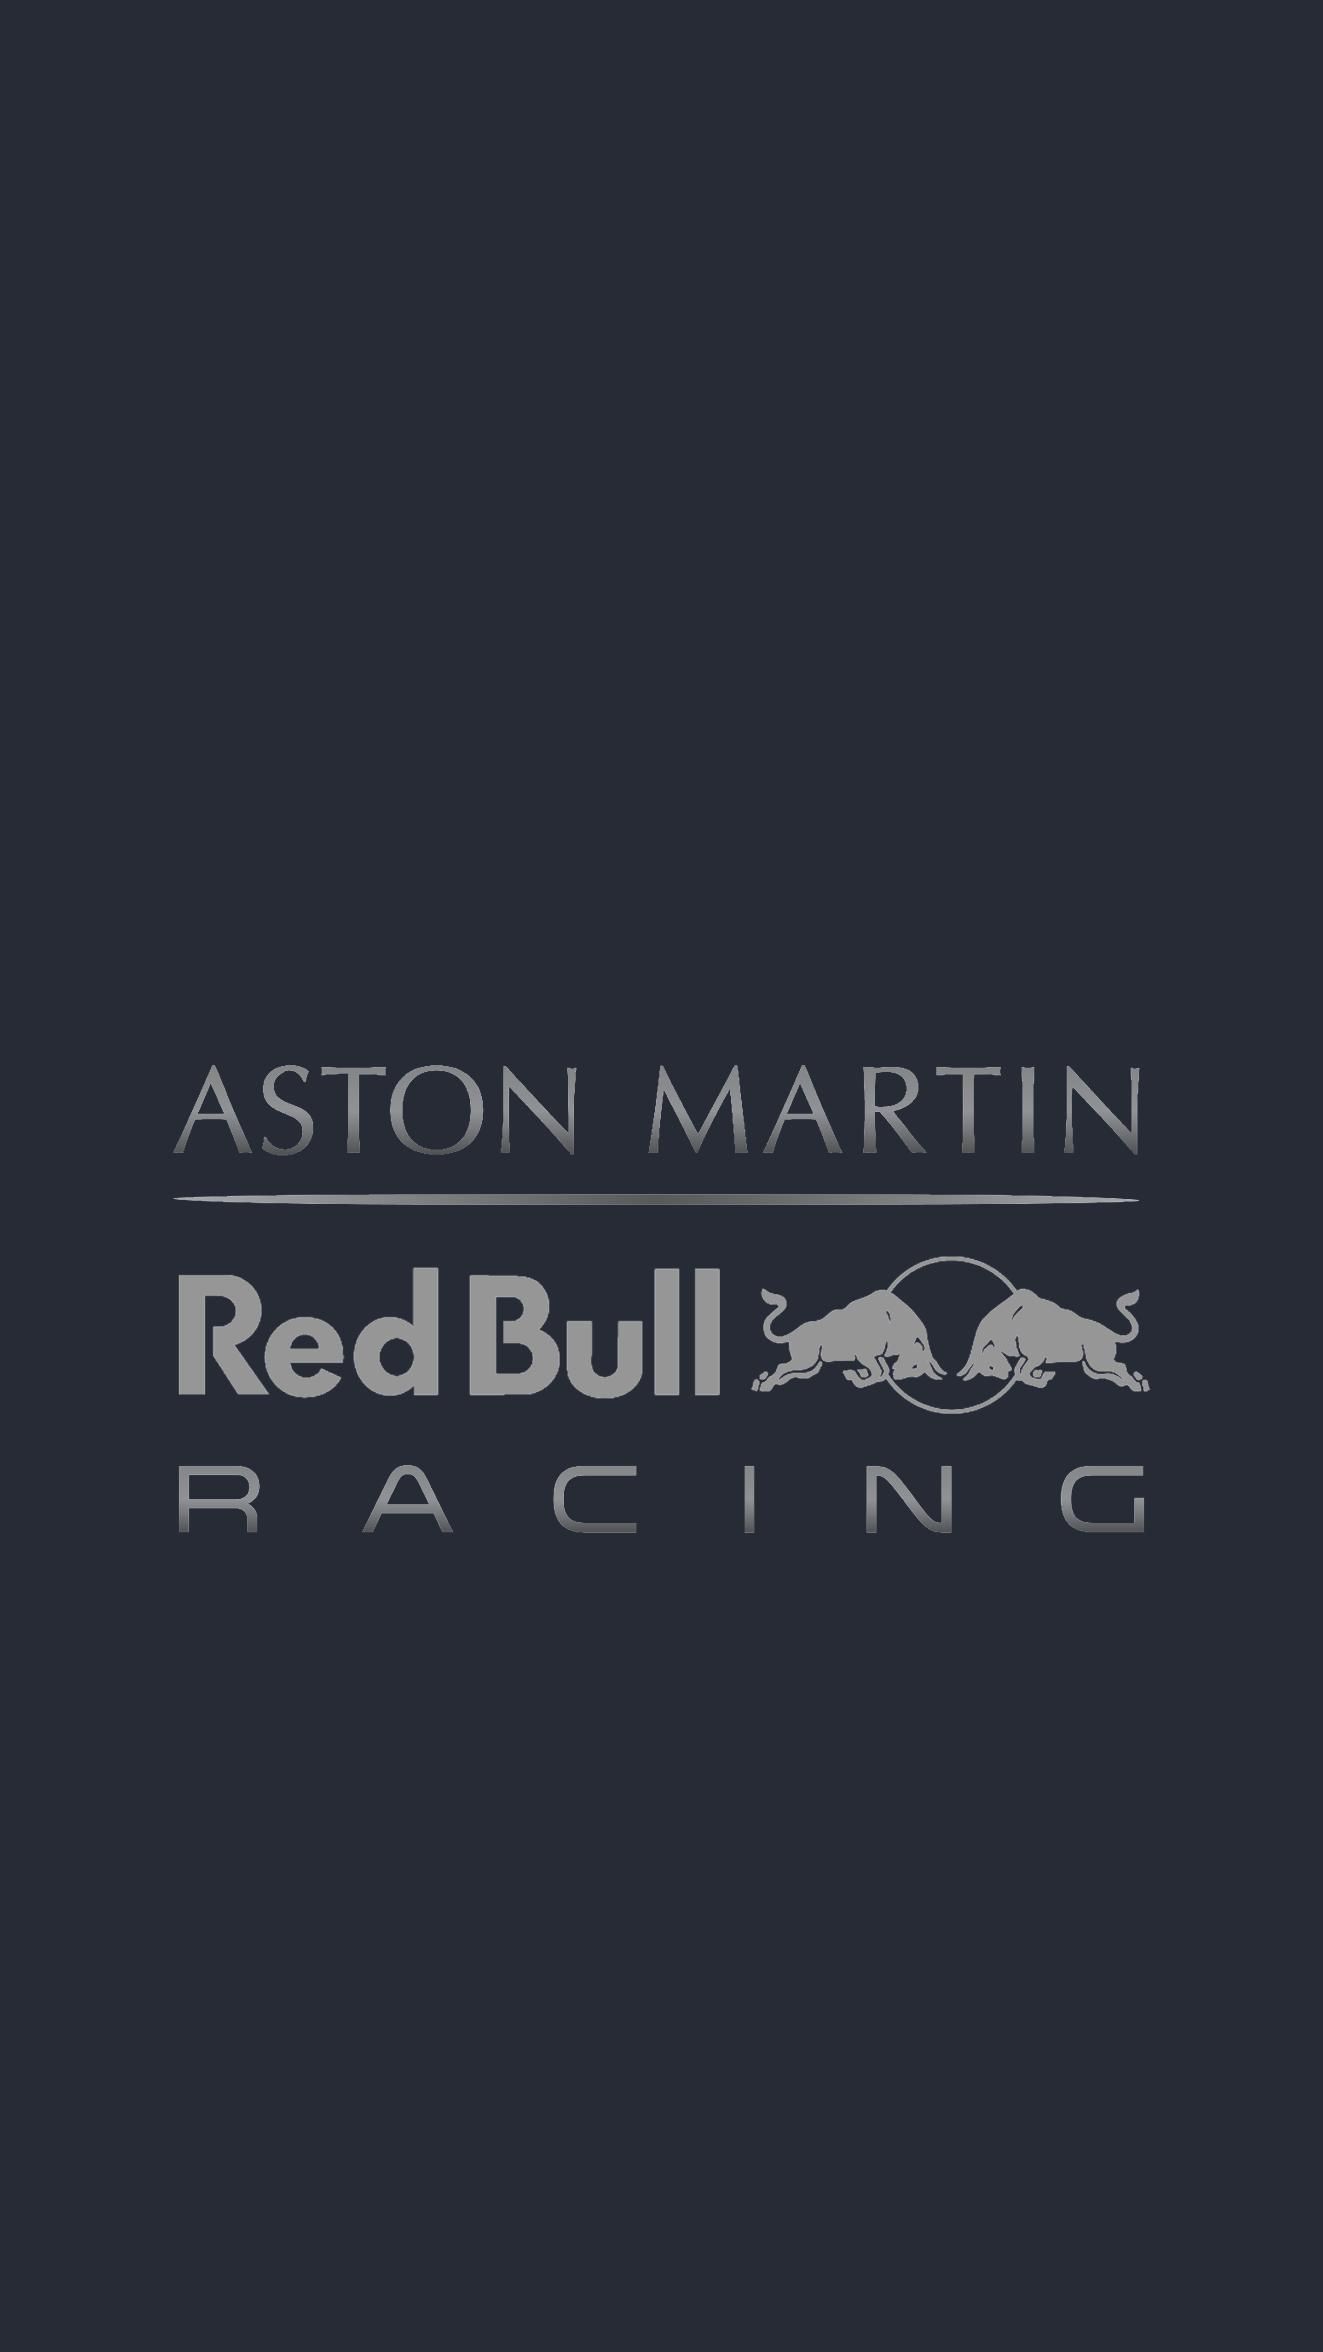 Aston martin red bull racing wallpaper logo middle low red bull racing red bull red bull f